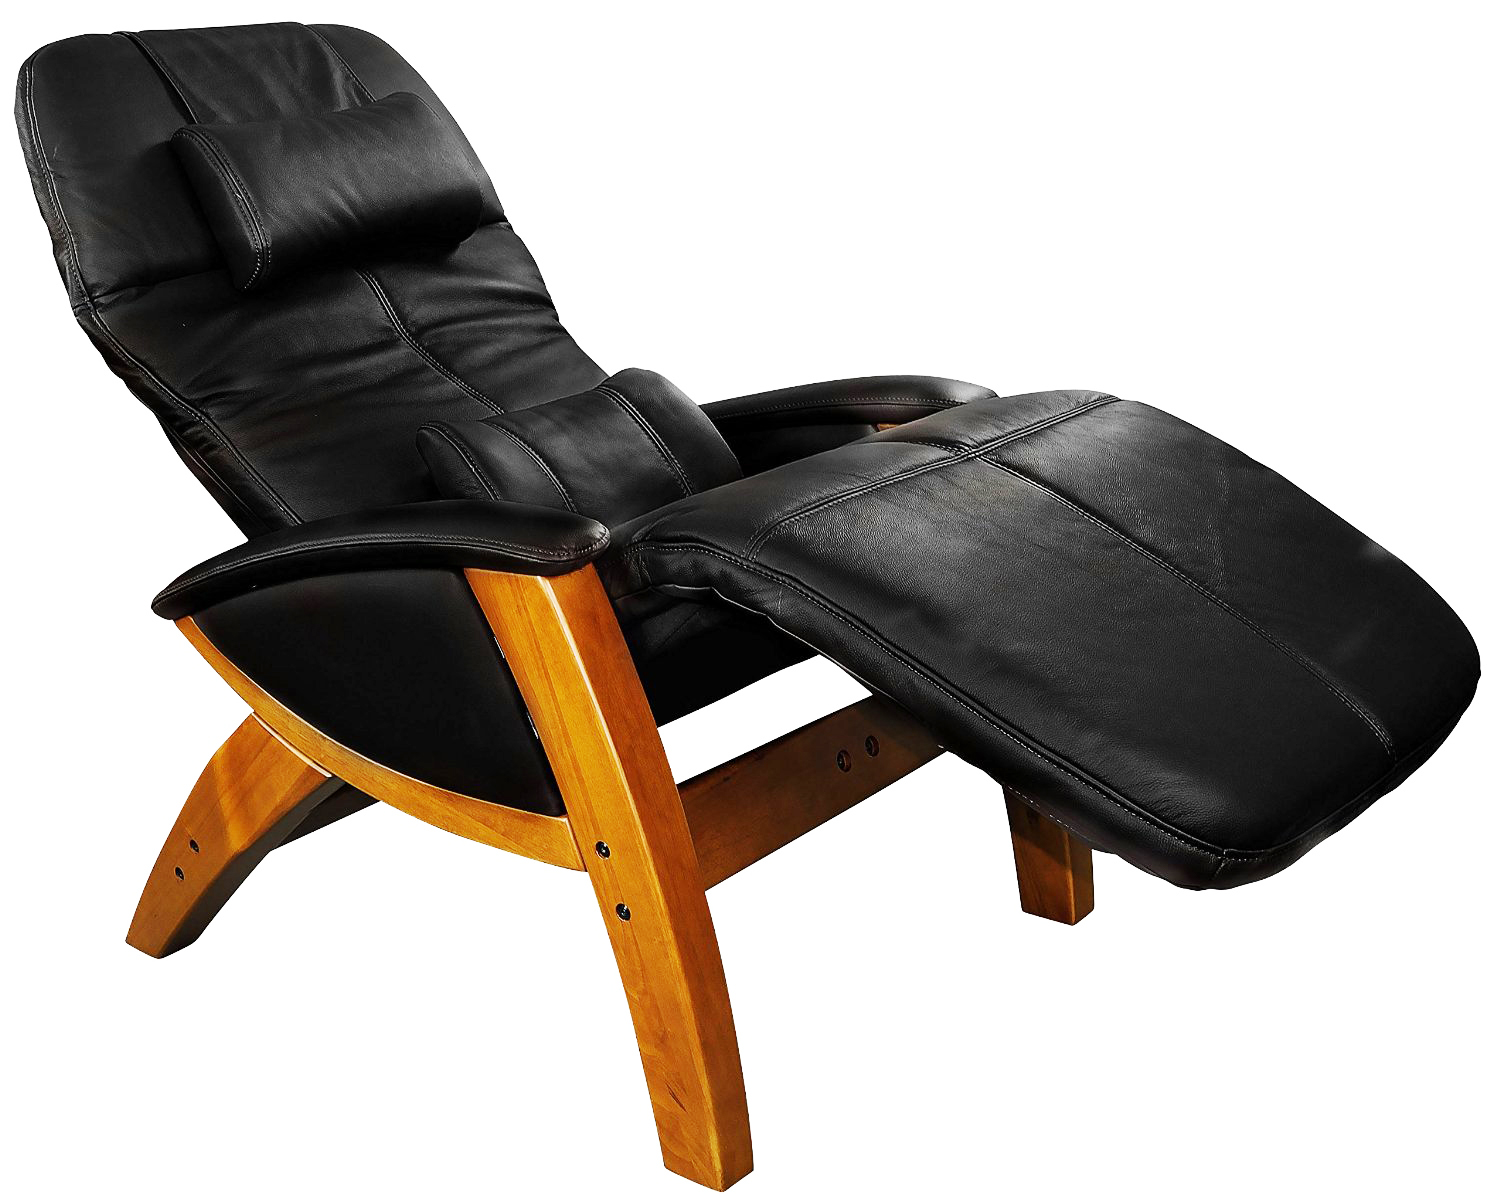 Svago Sv 410 415 Benessere Zero, Zero Gravity Leather Chair